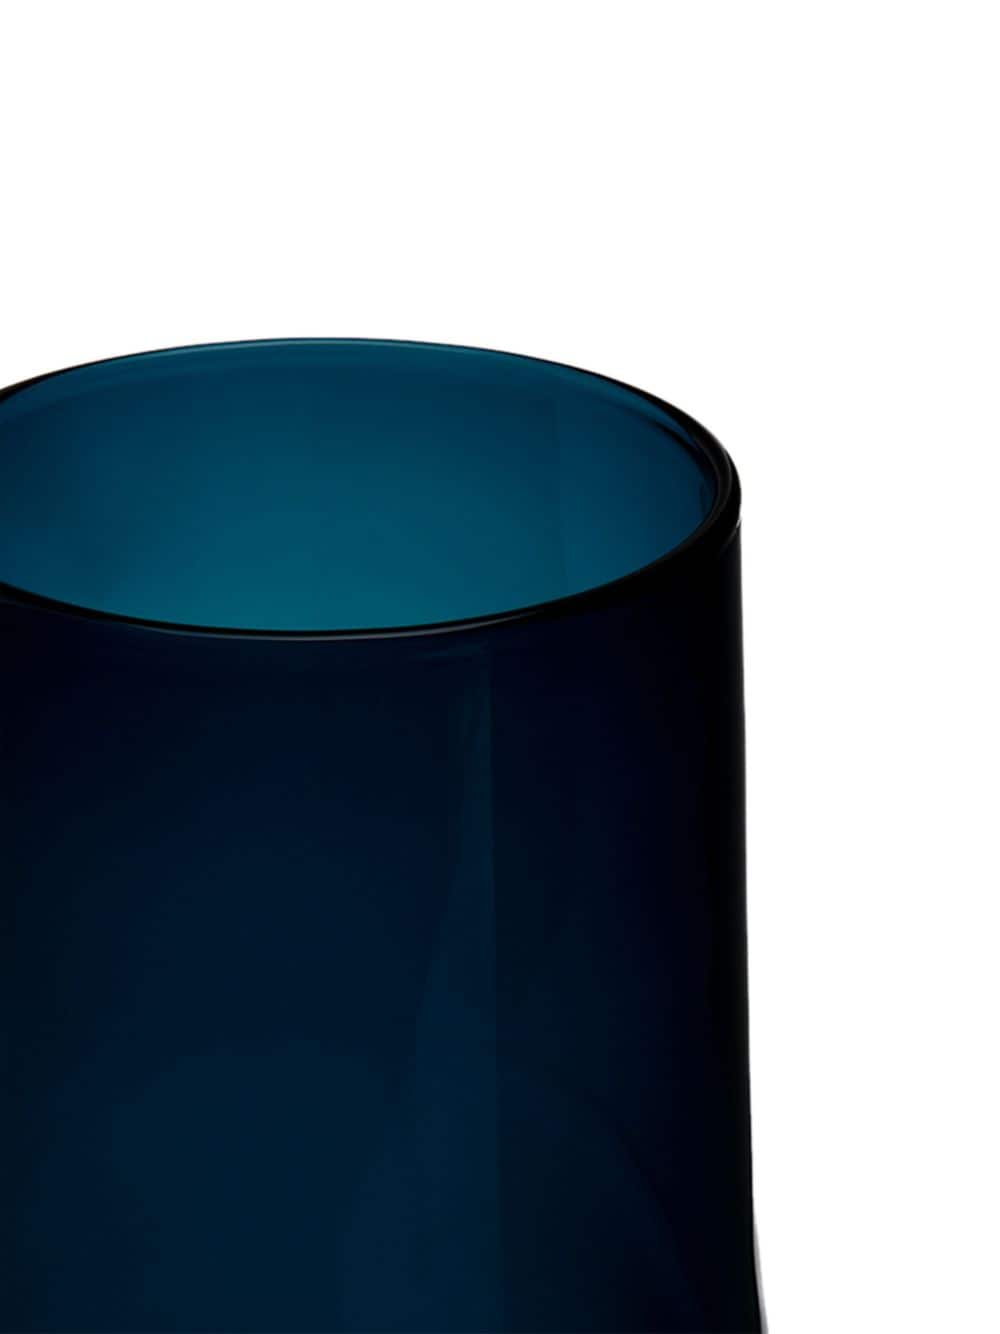 XLBoom large Spinn glass vase (31cm x 24cm) - Blauw